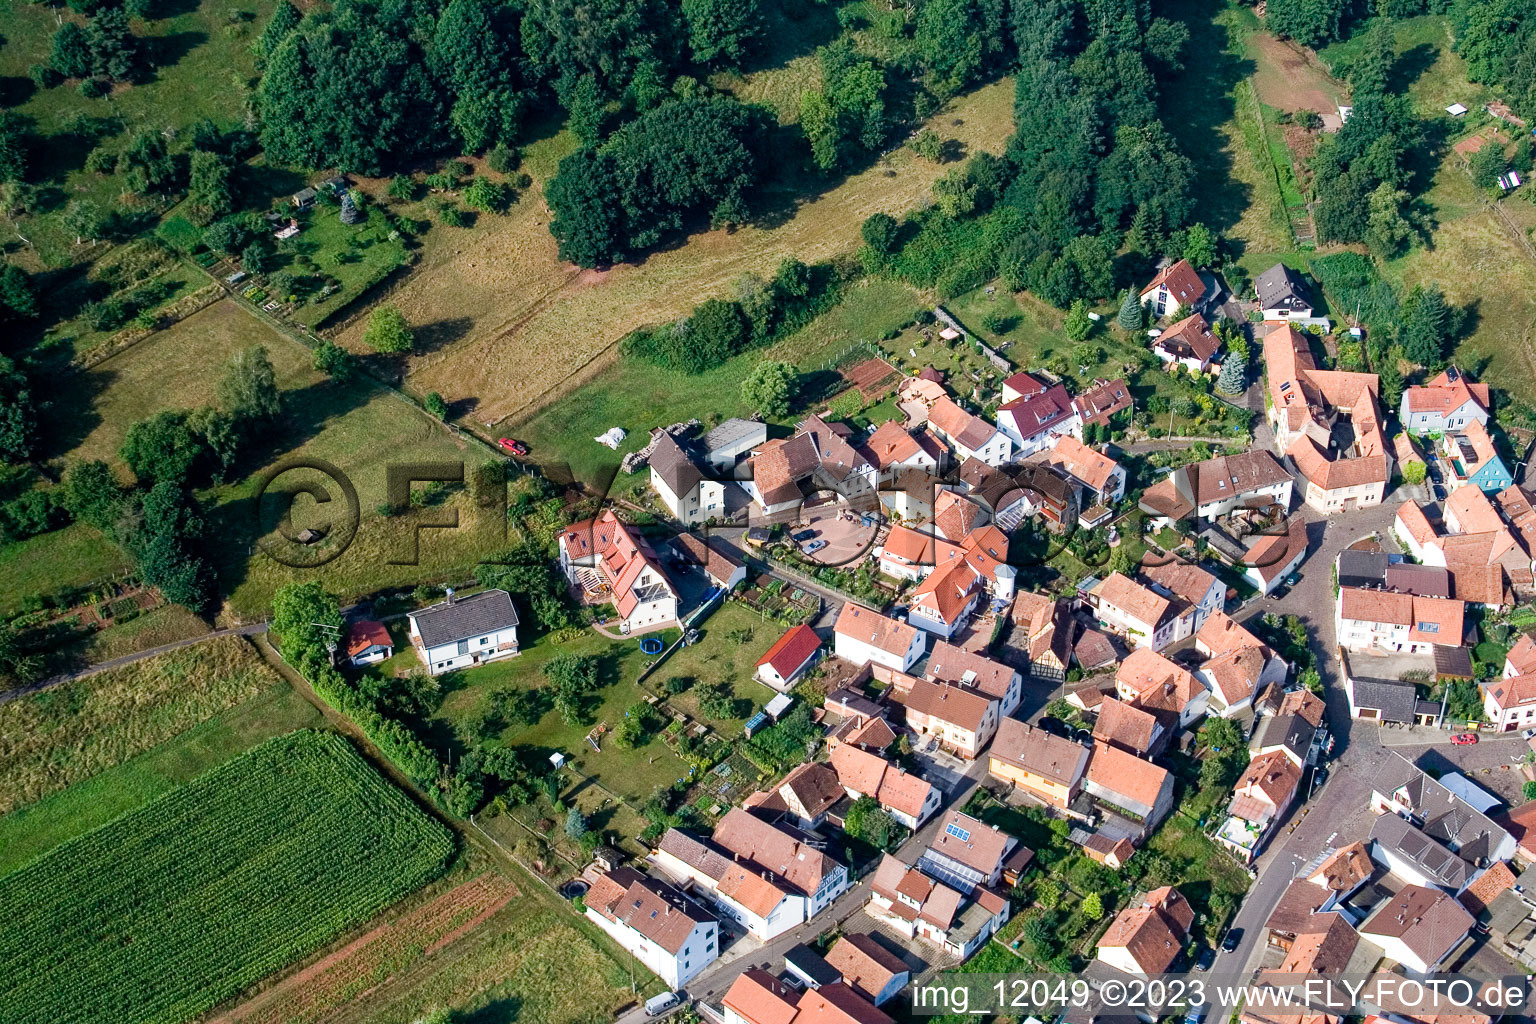 District Gräfenhausen in Annweiler am Trifels in the state Rhineland-Palatinate, Germany viewn from the air